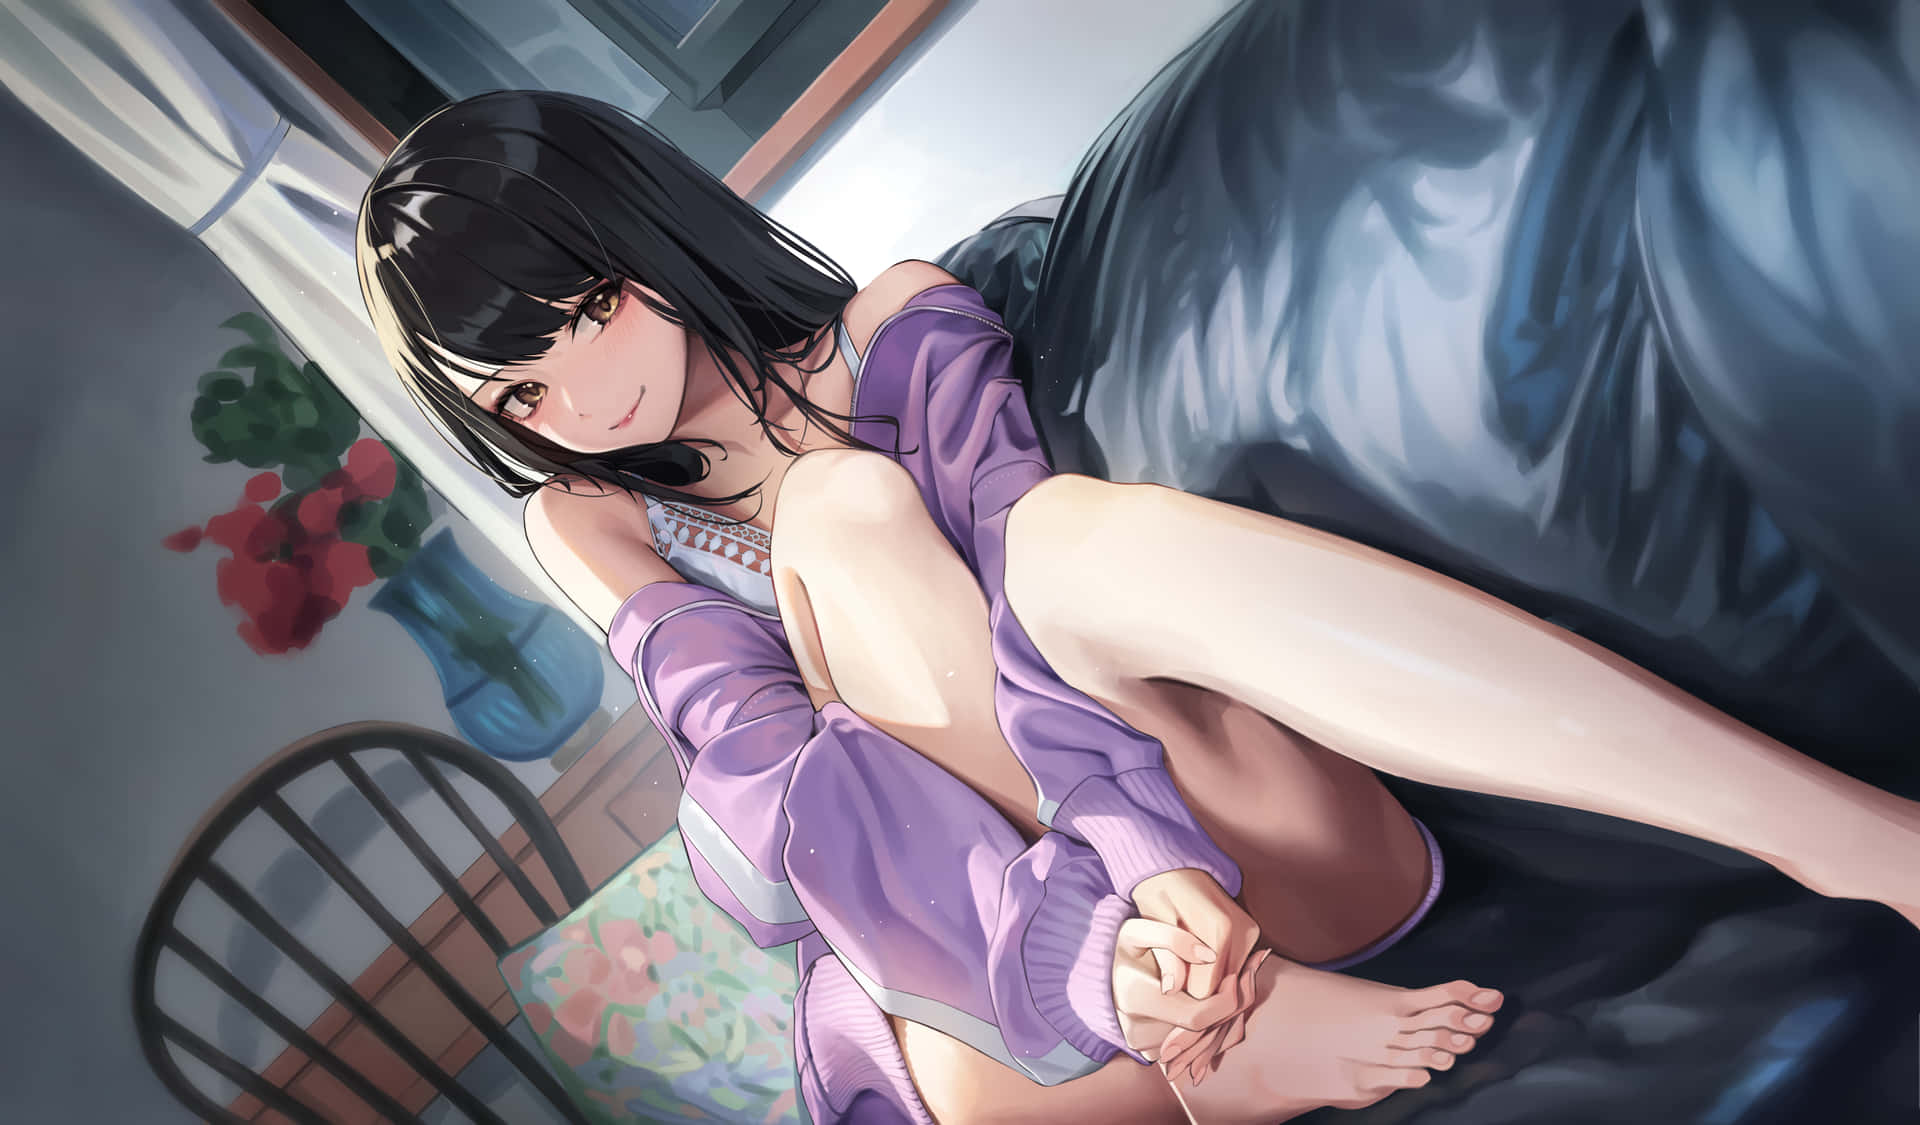 Shokomakinohara Anime Girl Feet Can Be Translated Into Italian As 